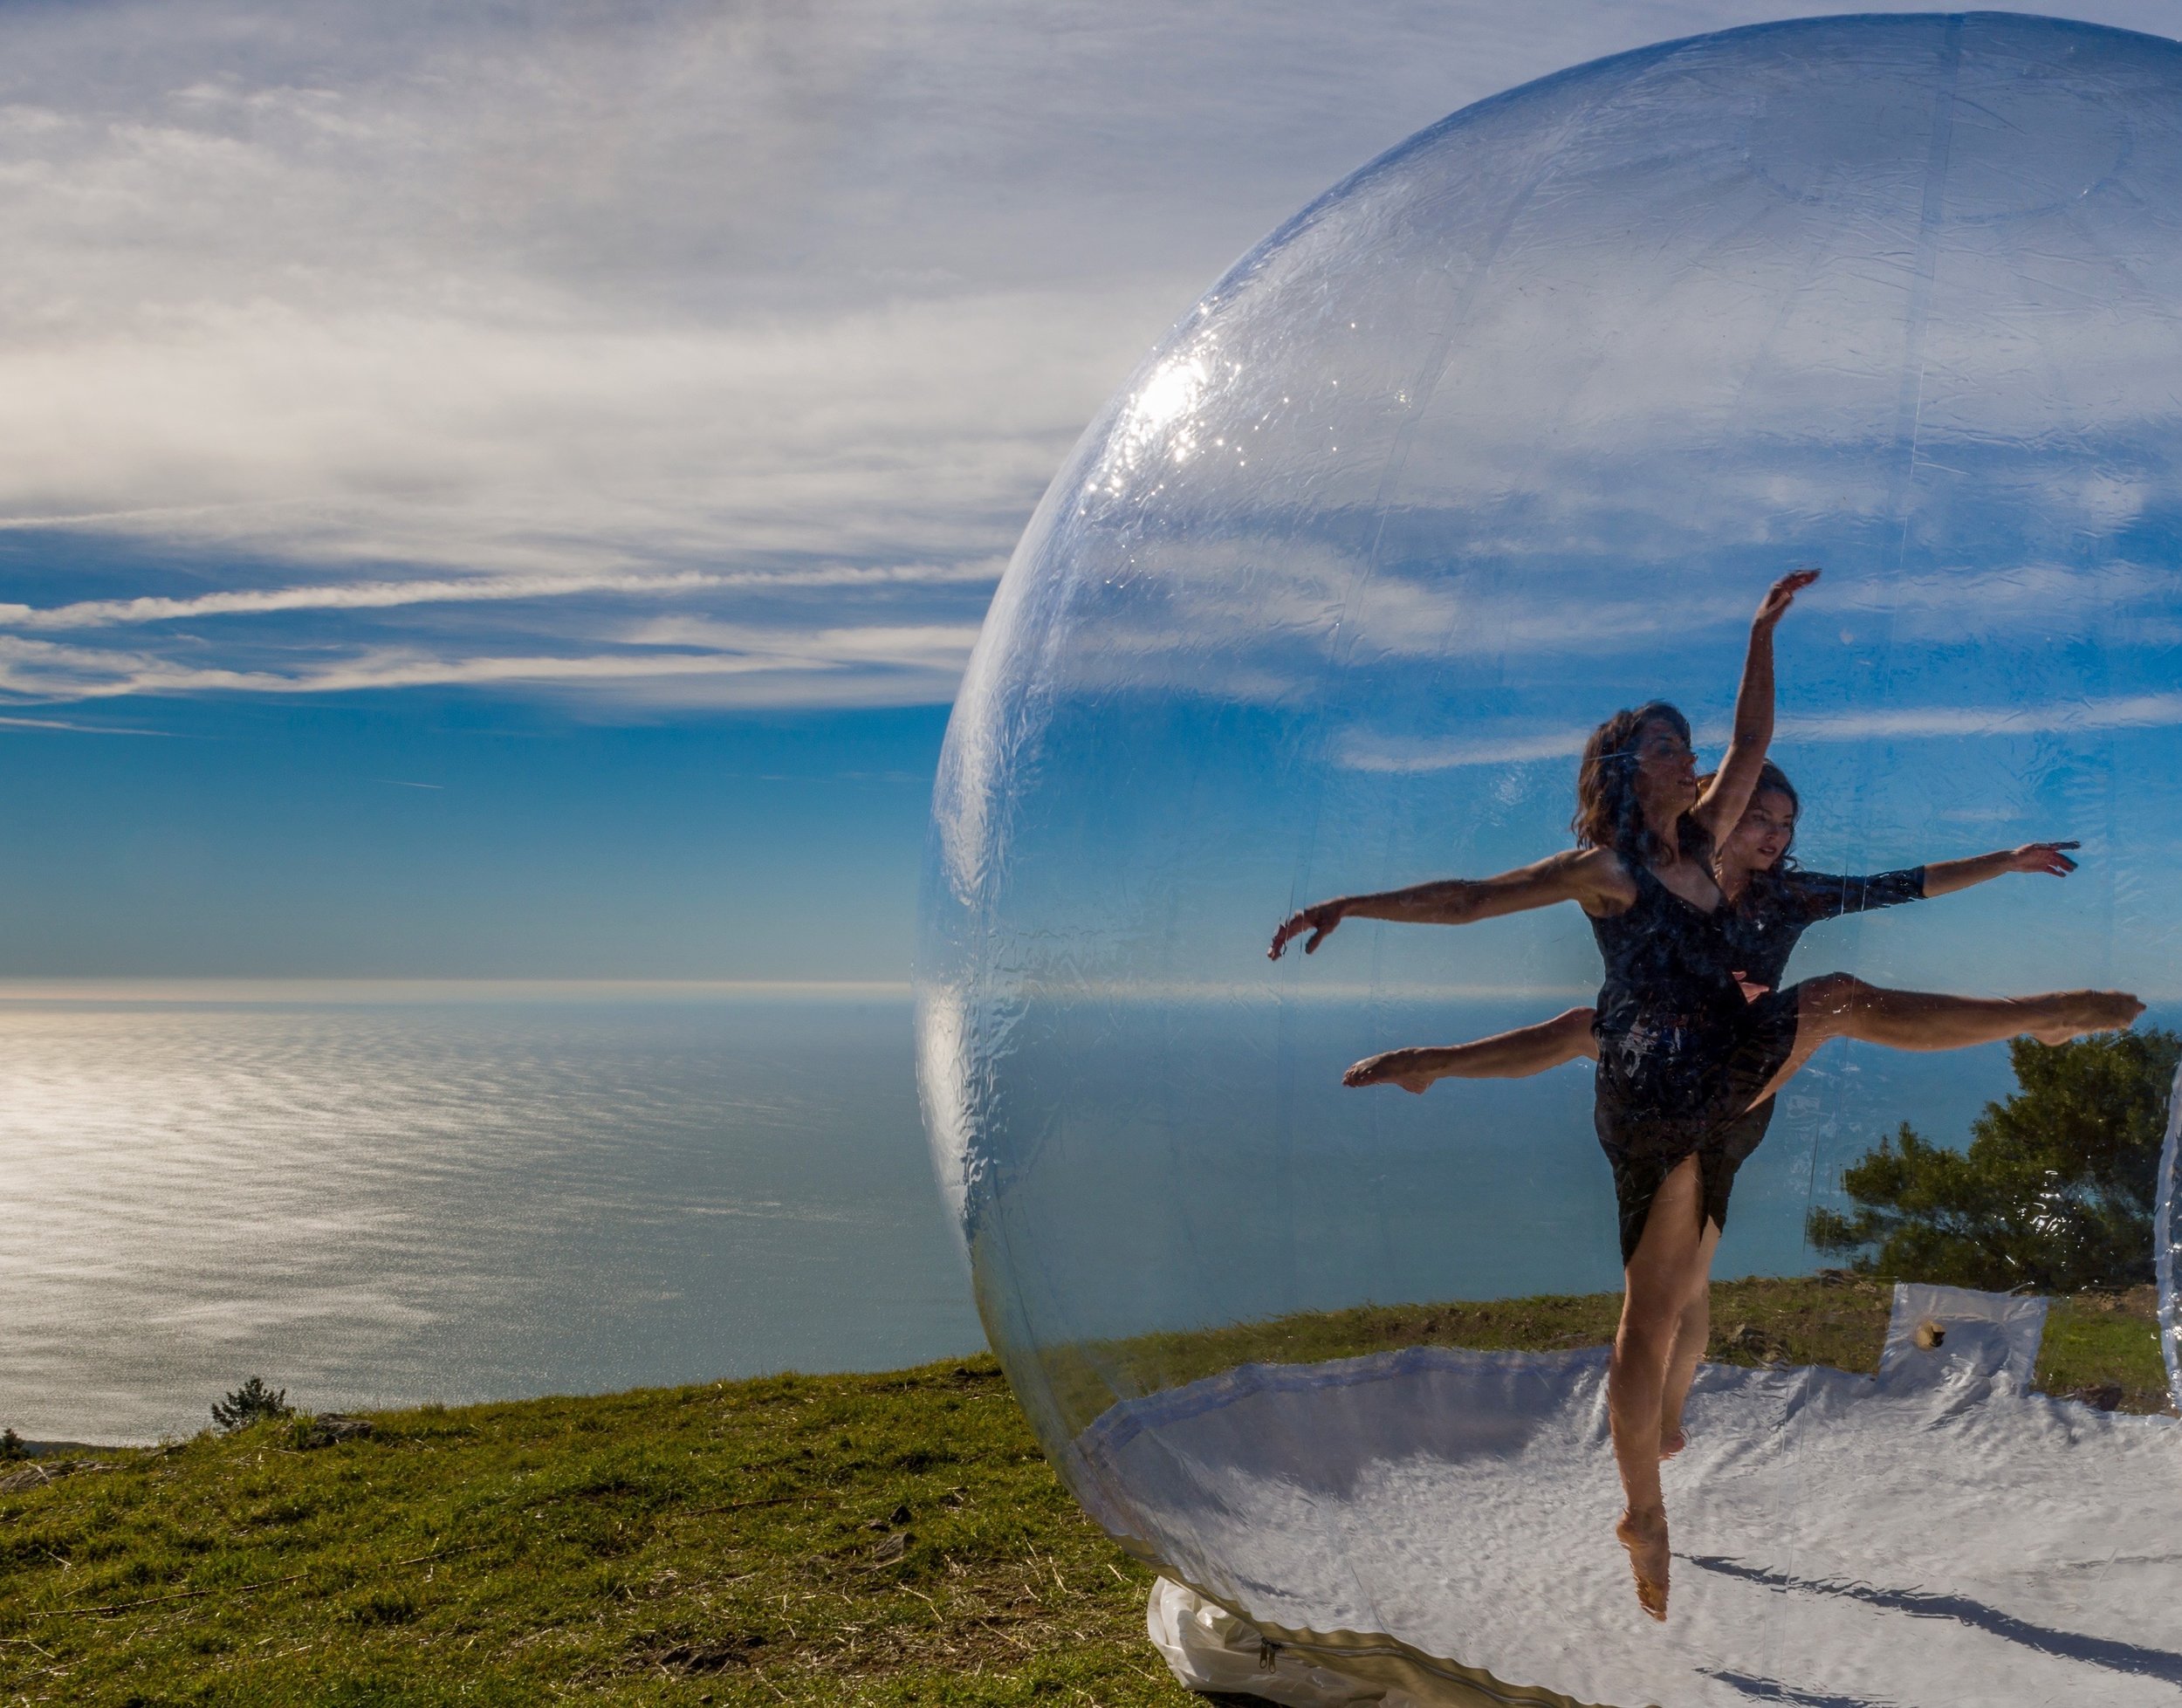 Kim Holt and Camryn Kelly - Printz Dance Project's "GLASSlands" by Jeff Zender